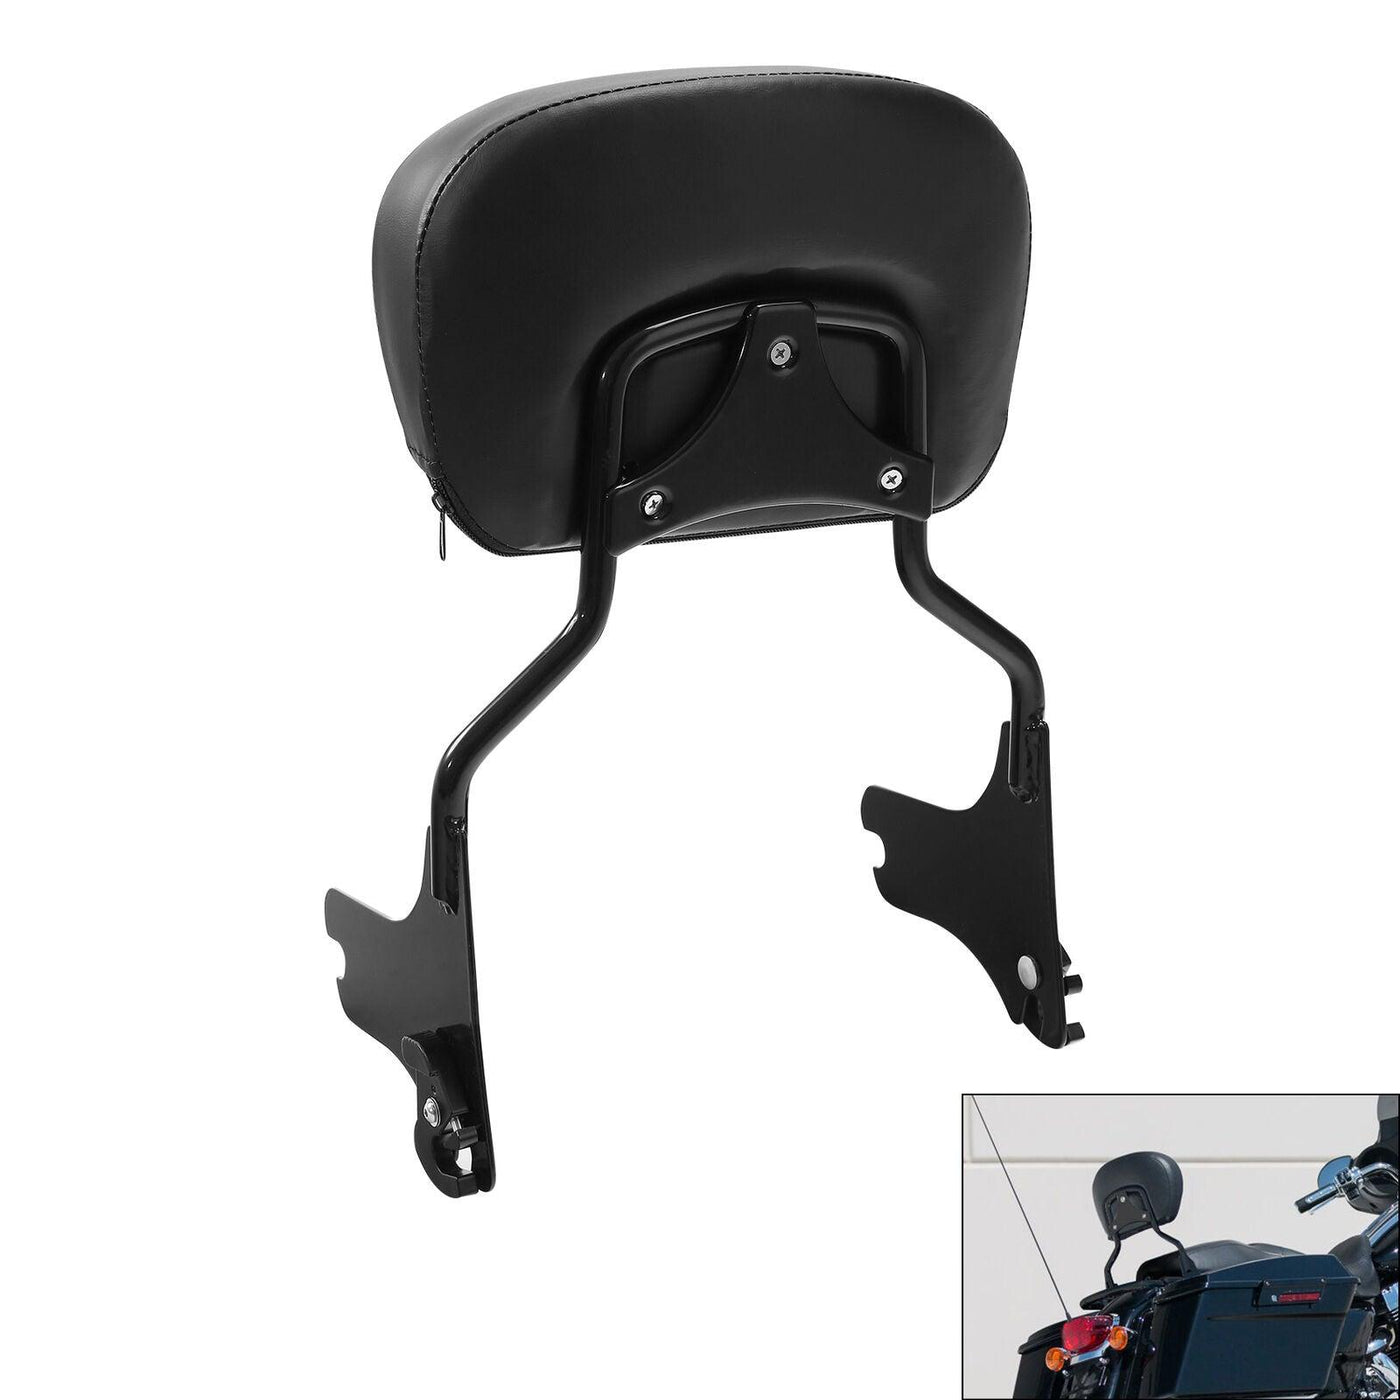 Chrome/Black Passenger Backrest Pad Sissy Bar Fit For Harley Electra Glide 97-08 - Moto Life Products